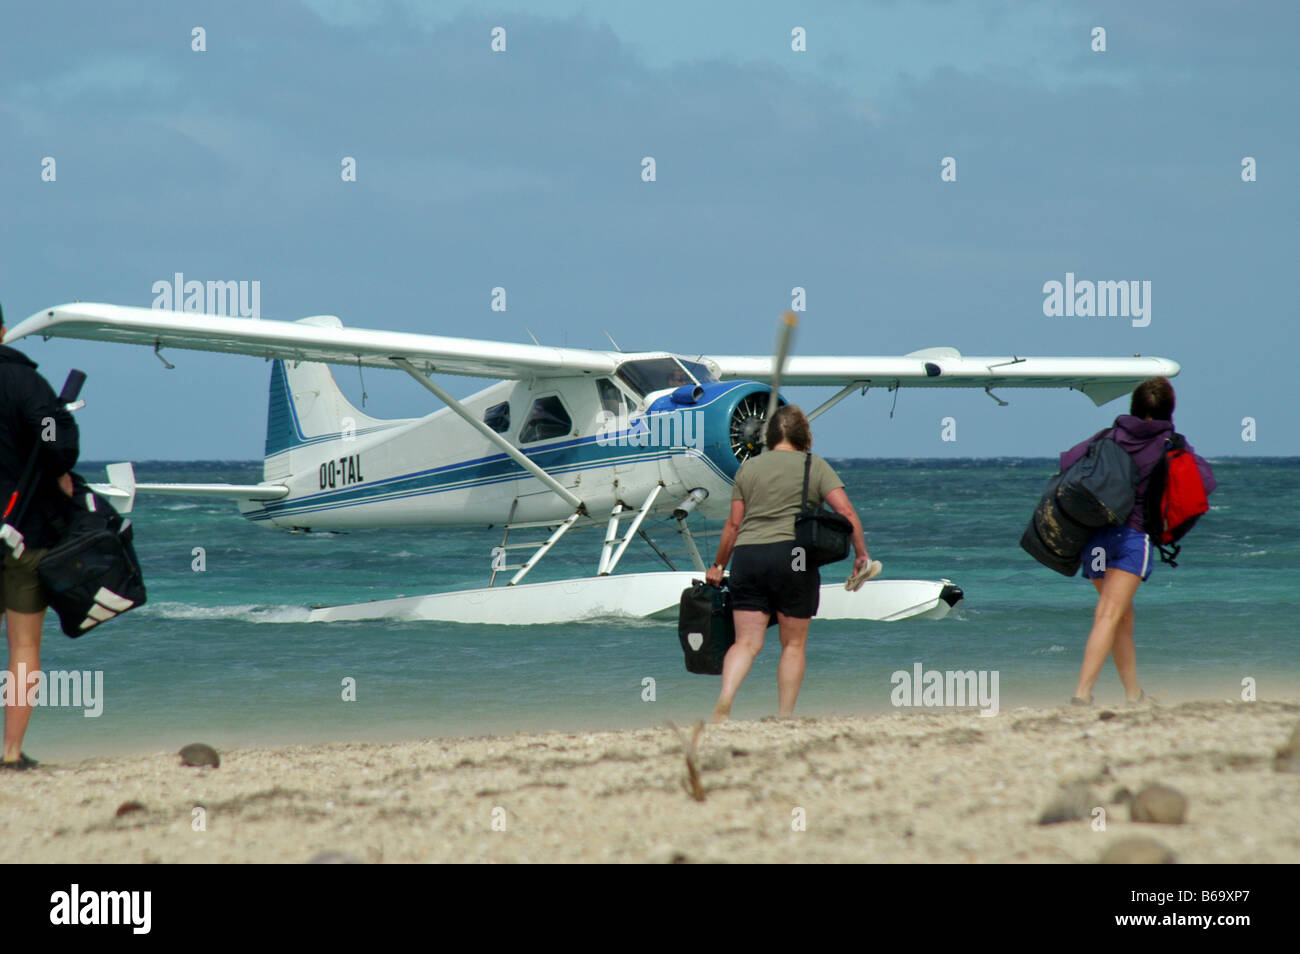 https://c8.alamy.com/comp/B69XP7/people-boarding-sea-plane-fiji-B69XP7.jpg